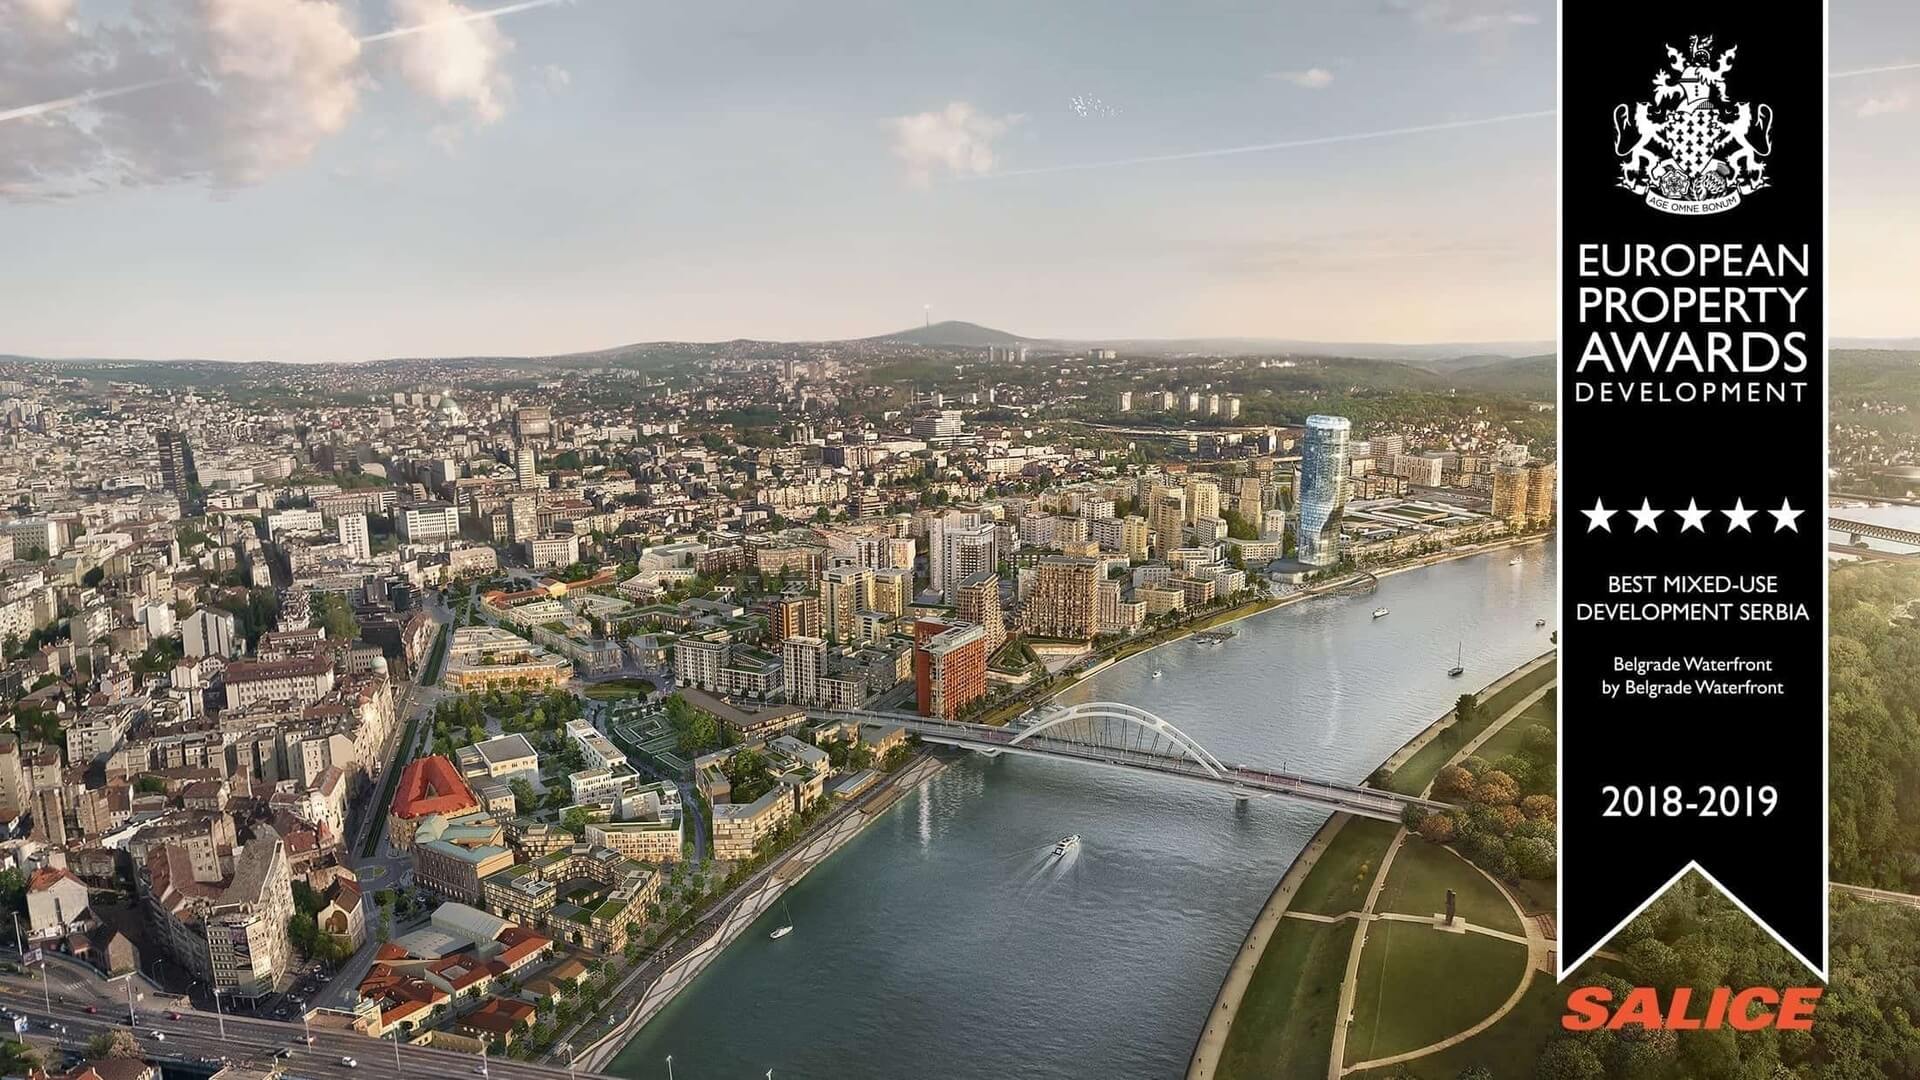 Belgrade Waterfront wins European Property Award in Best Mixed-Use Development Category